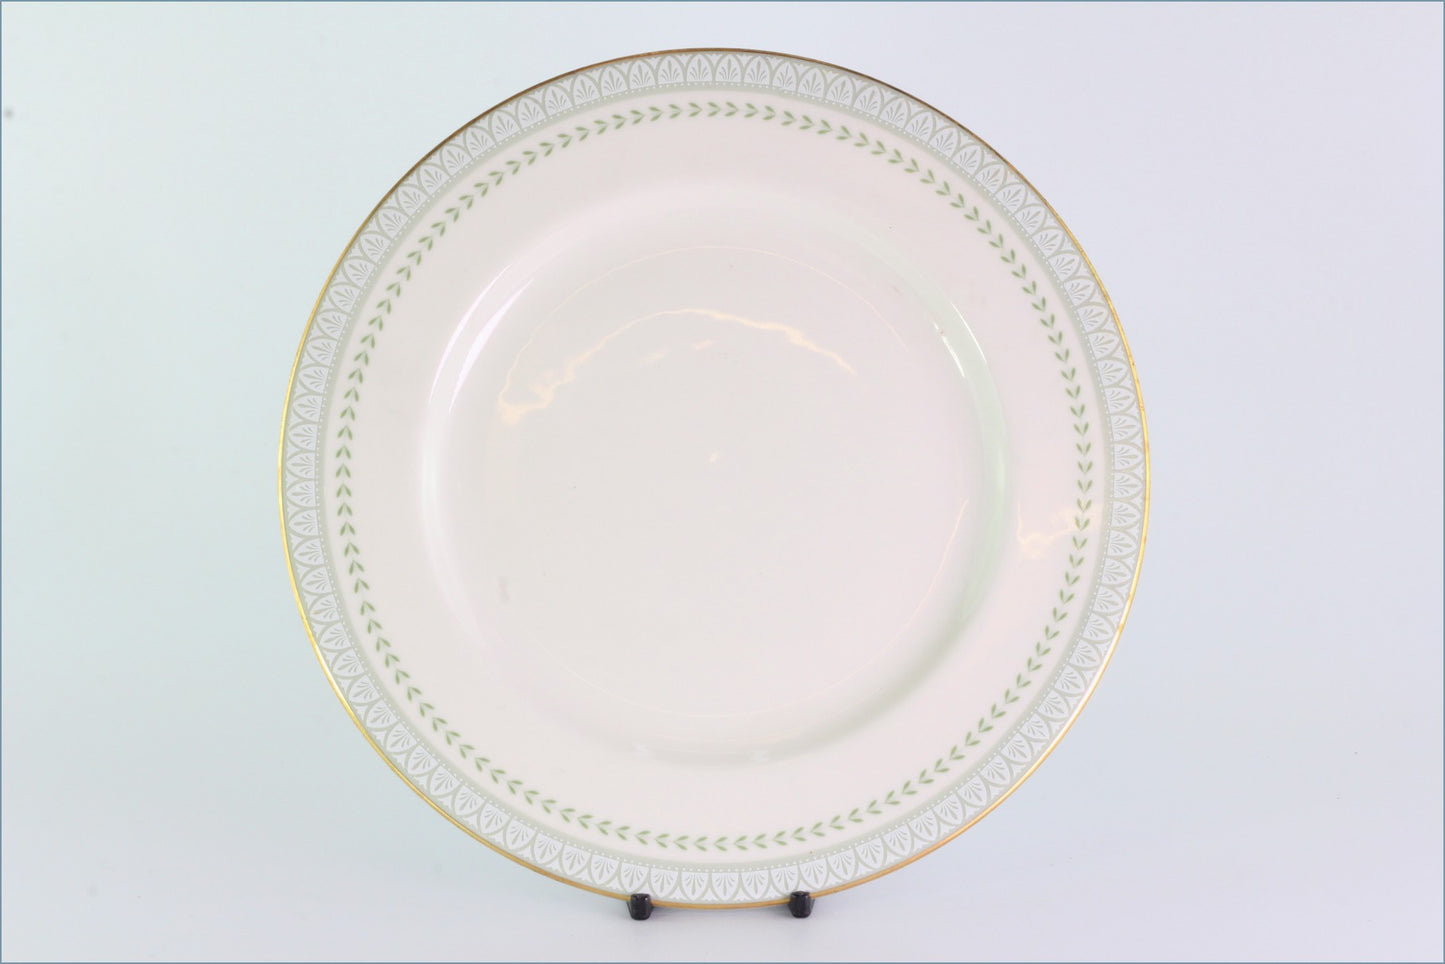 Royal Doulton - Berkshire (TC1021) - 9" Luncheon Plate